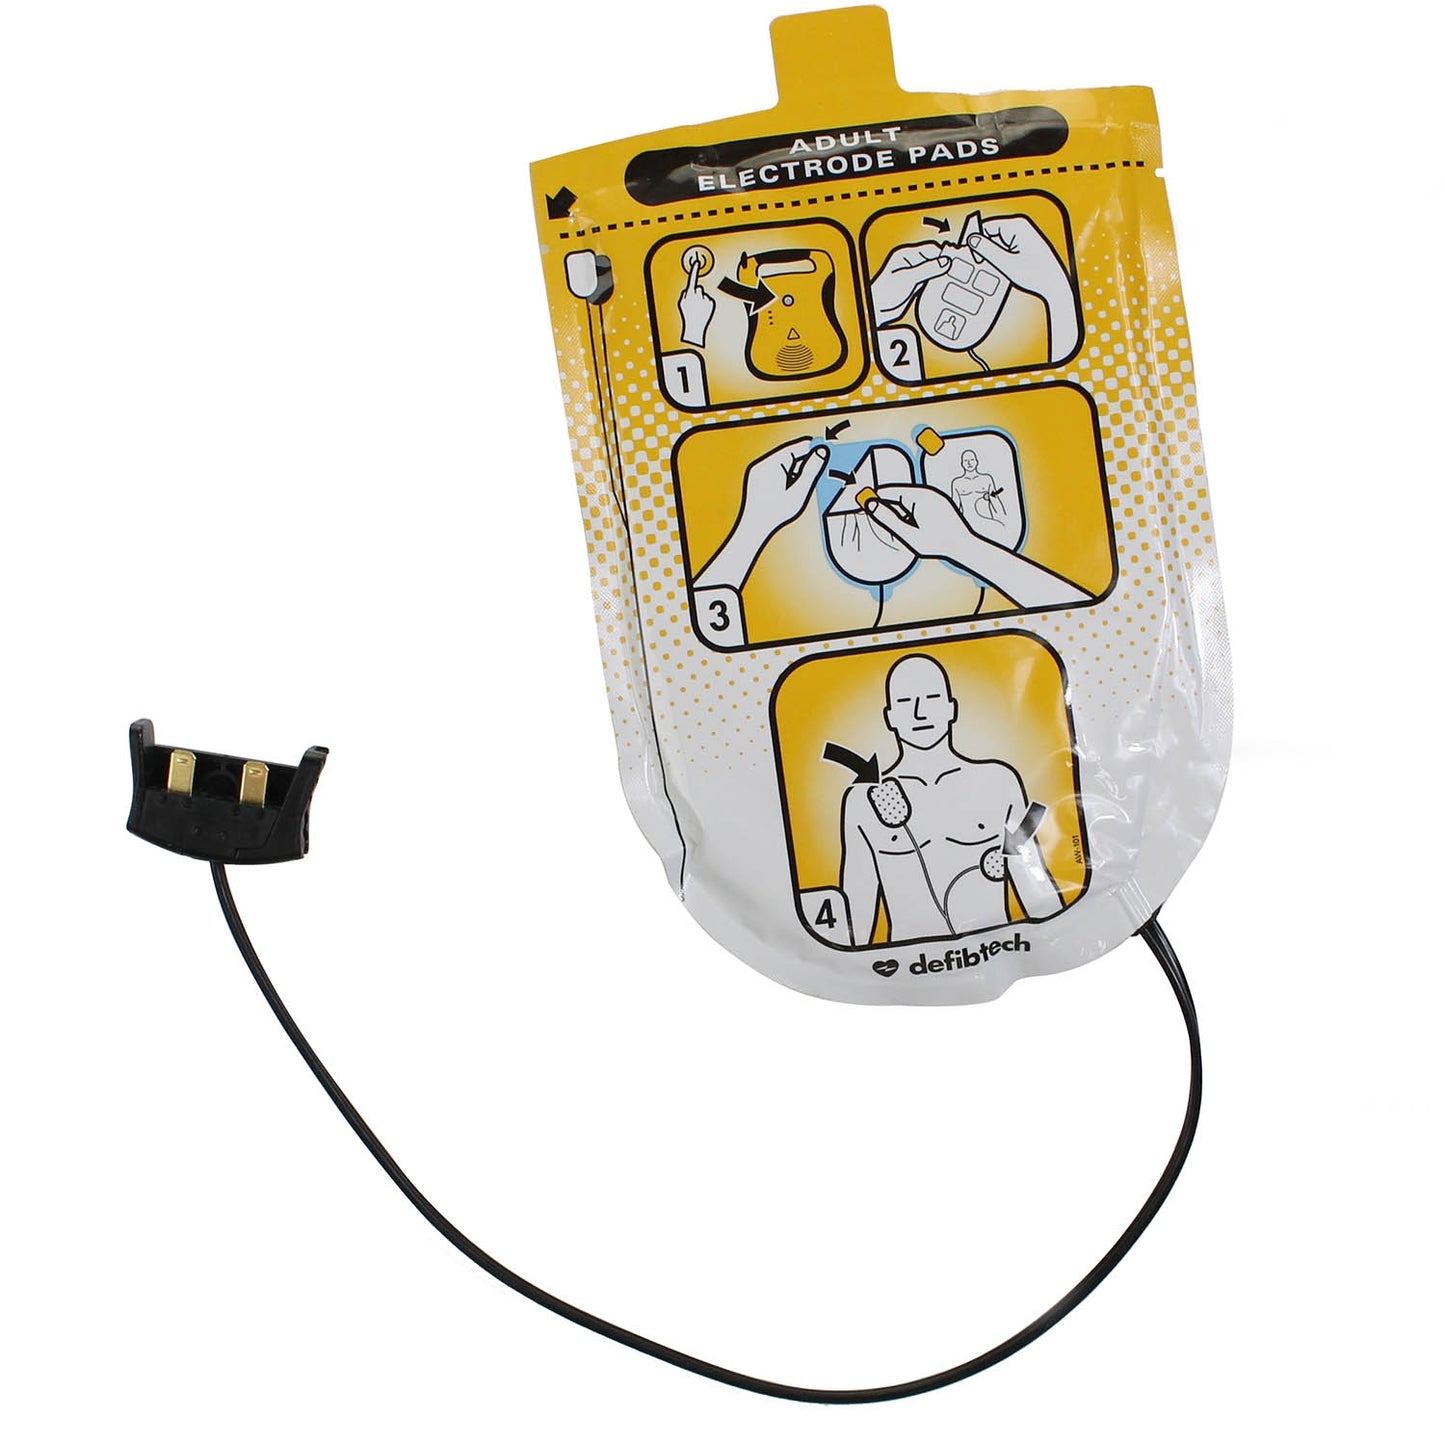 Lifeline AED Adult Defibrillation Pads Package (1 set)